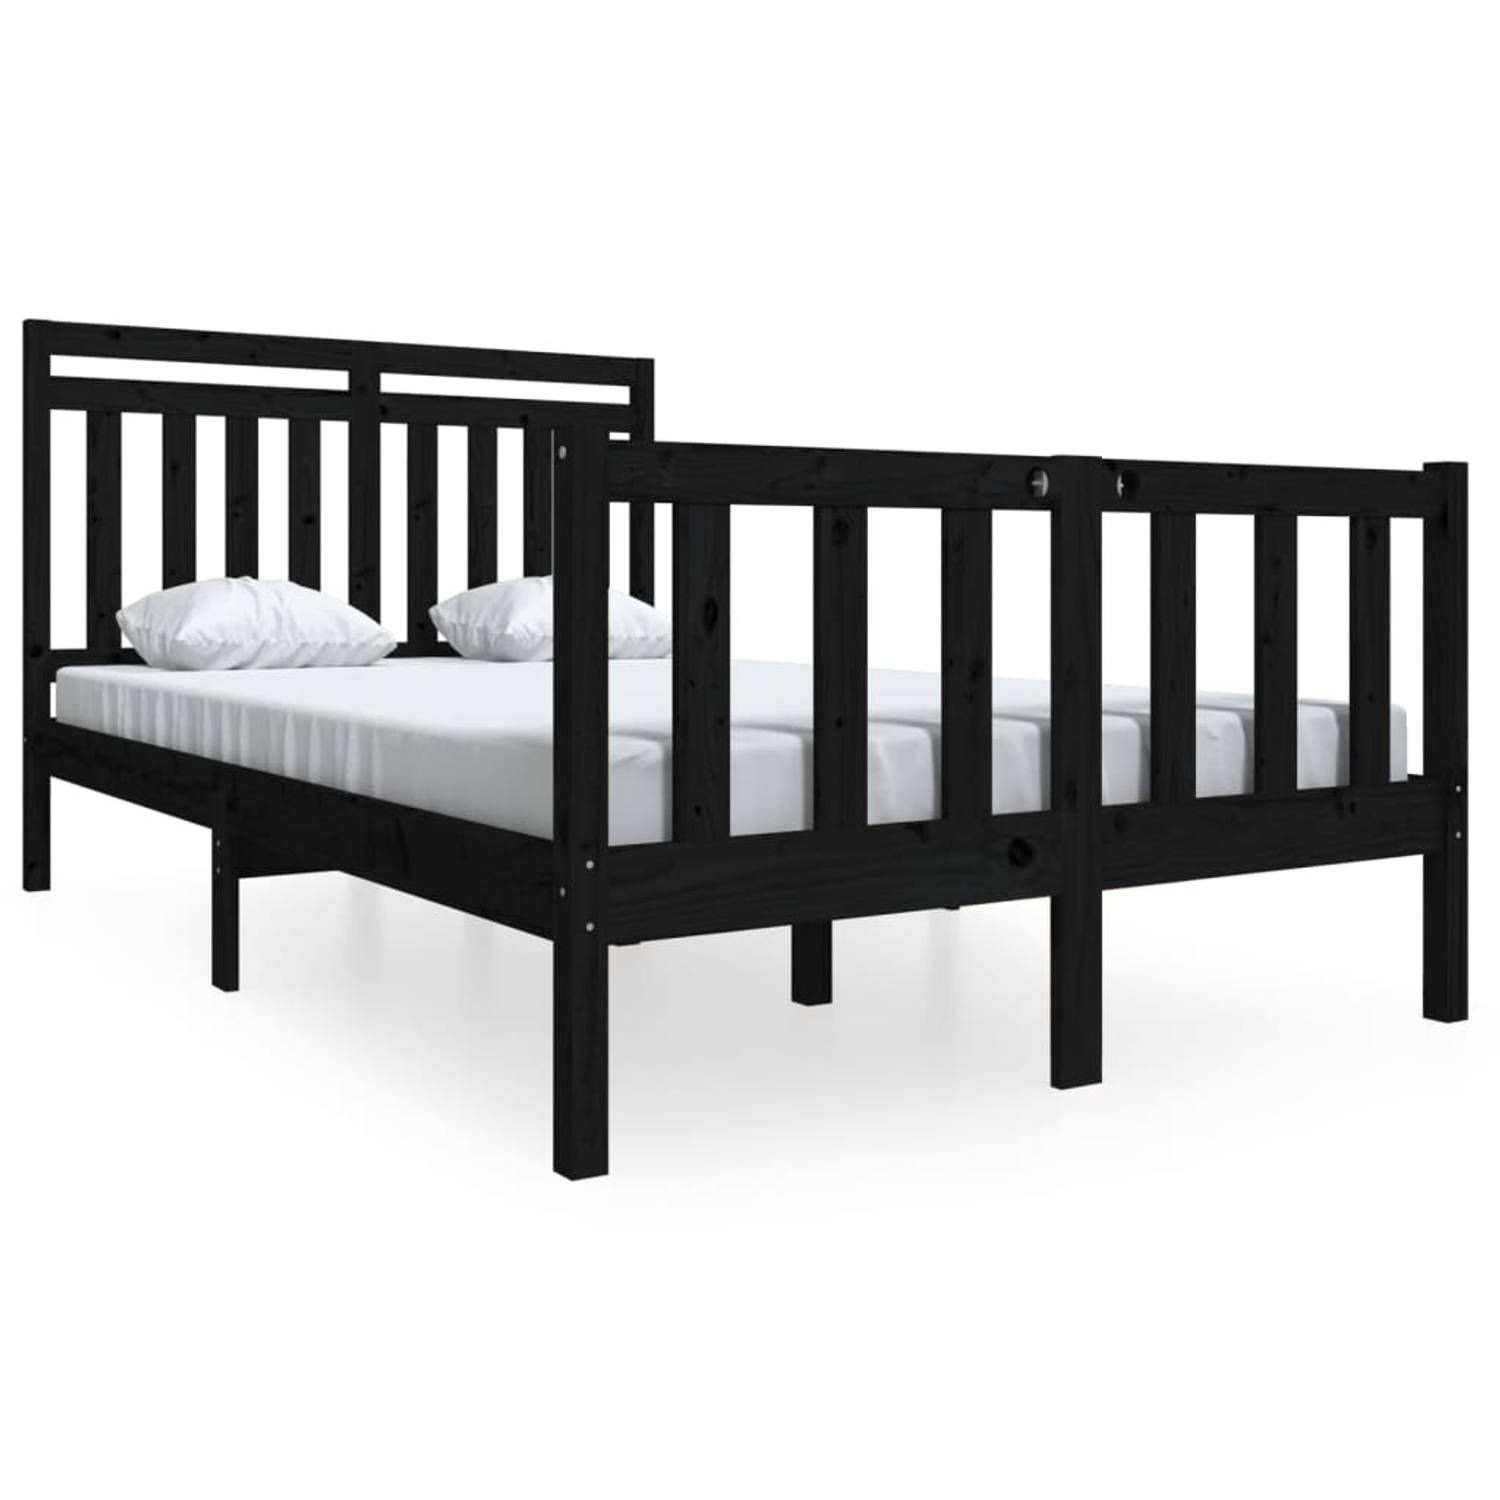 The Living Store Bedframe massief hout zwart 120x190 cm 4FT Small Double - Bedframe - Bedframes - Tweepersoonsbed - Bed - Bedombouw - Dubbel Bed - Frame - Bed Frame - Ledikant - Be